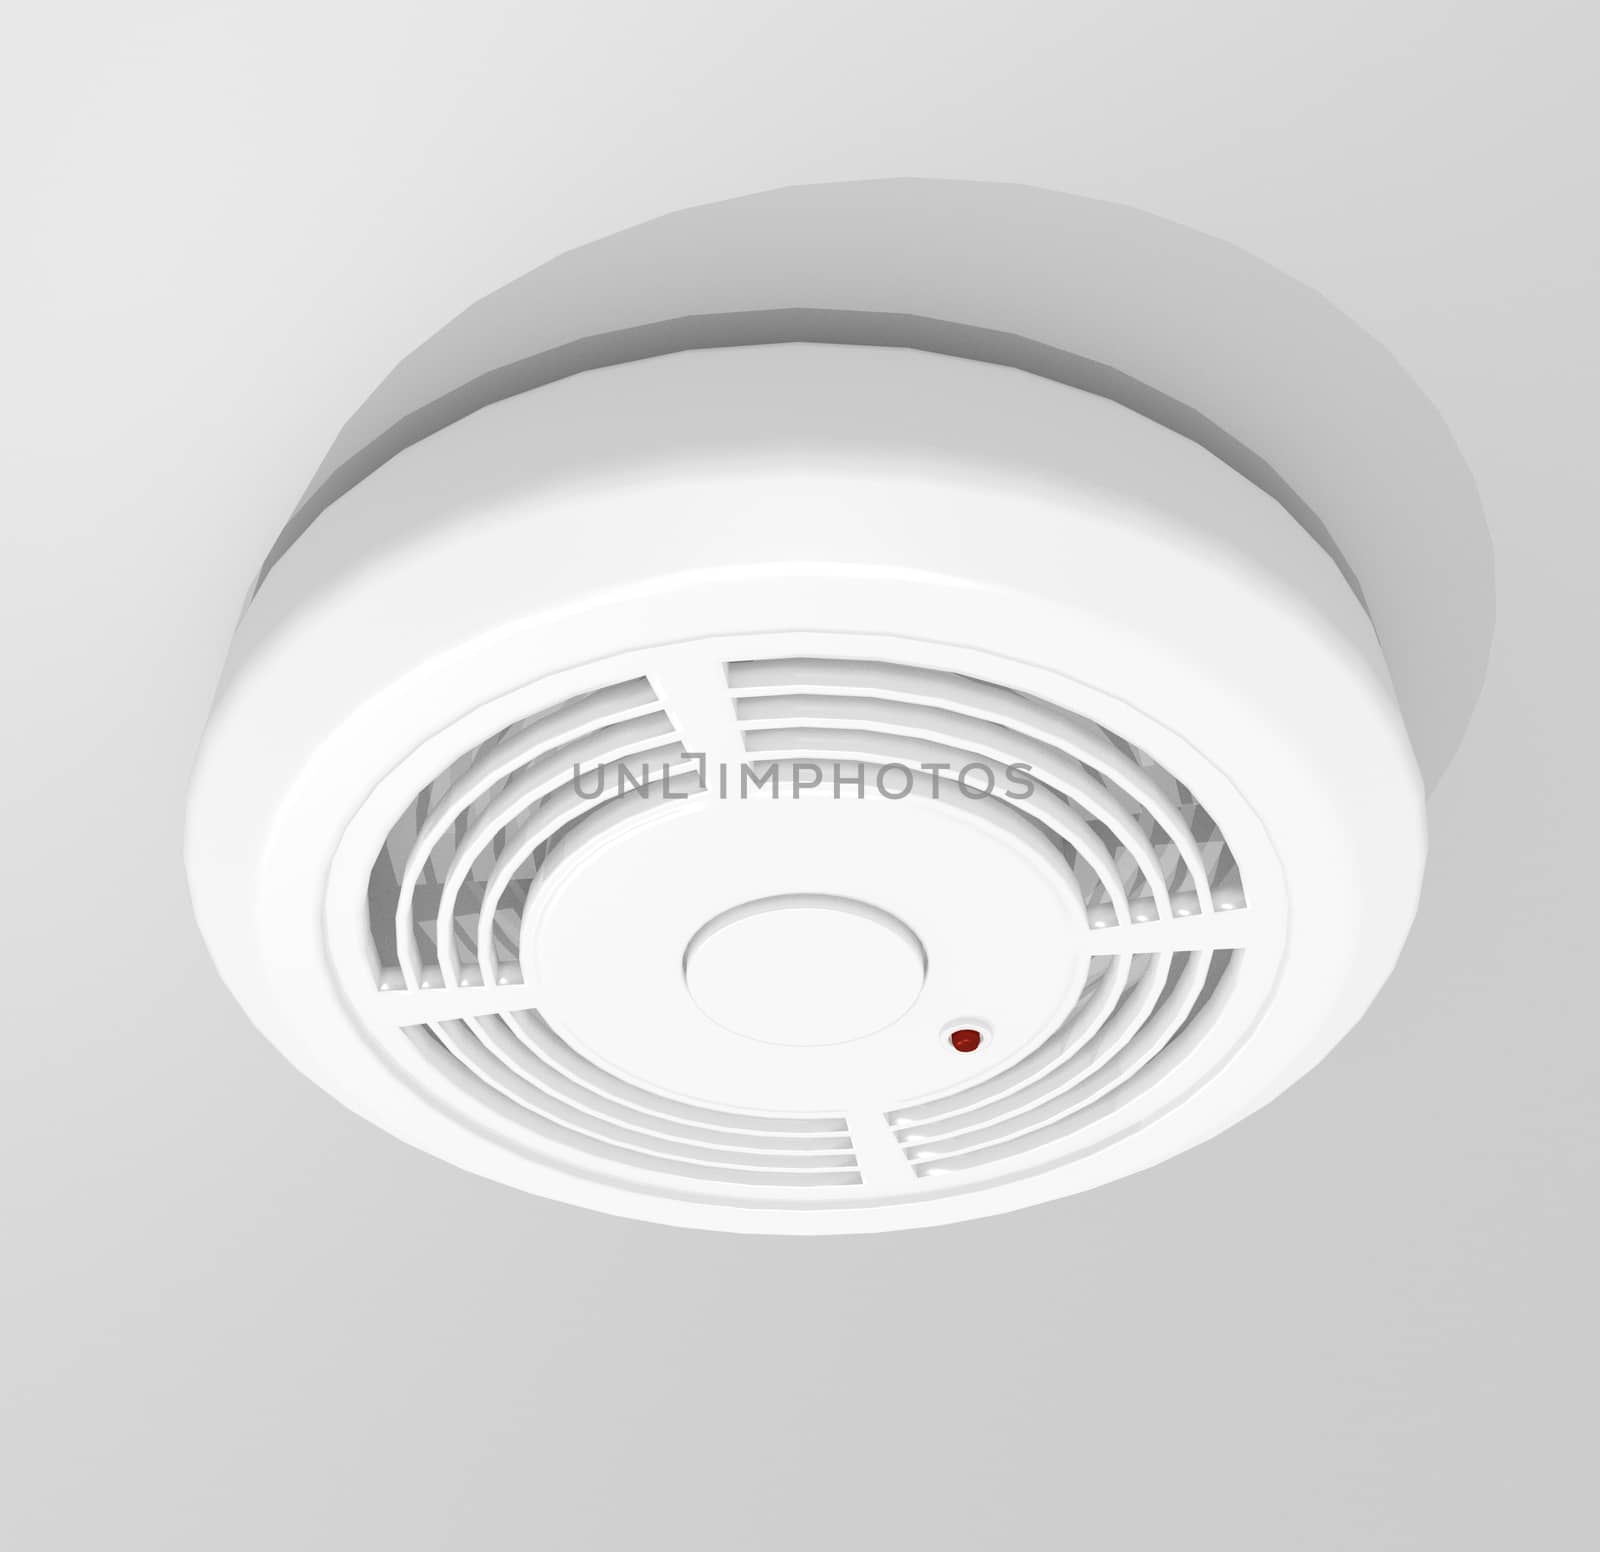 Illustration depicting a white round smoke detector.